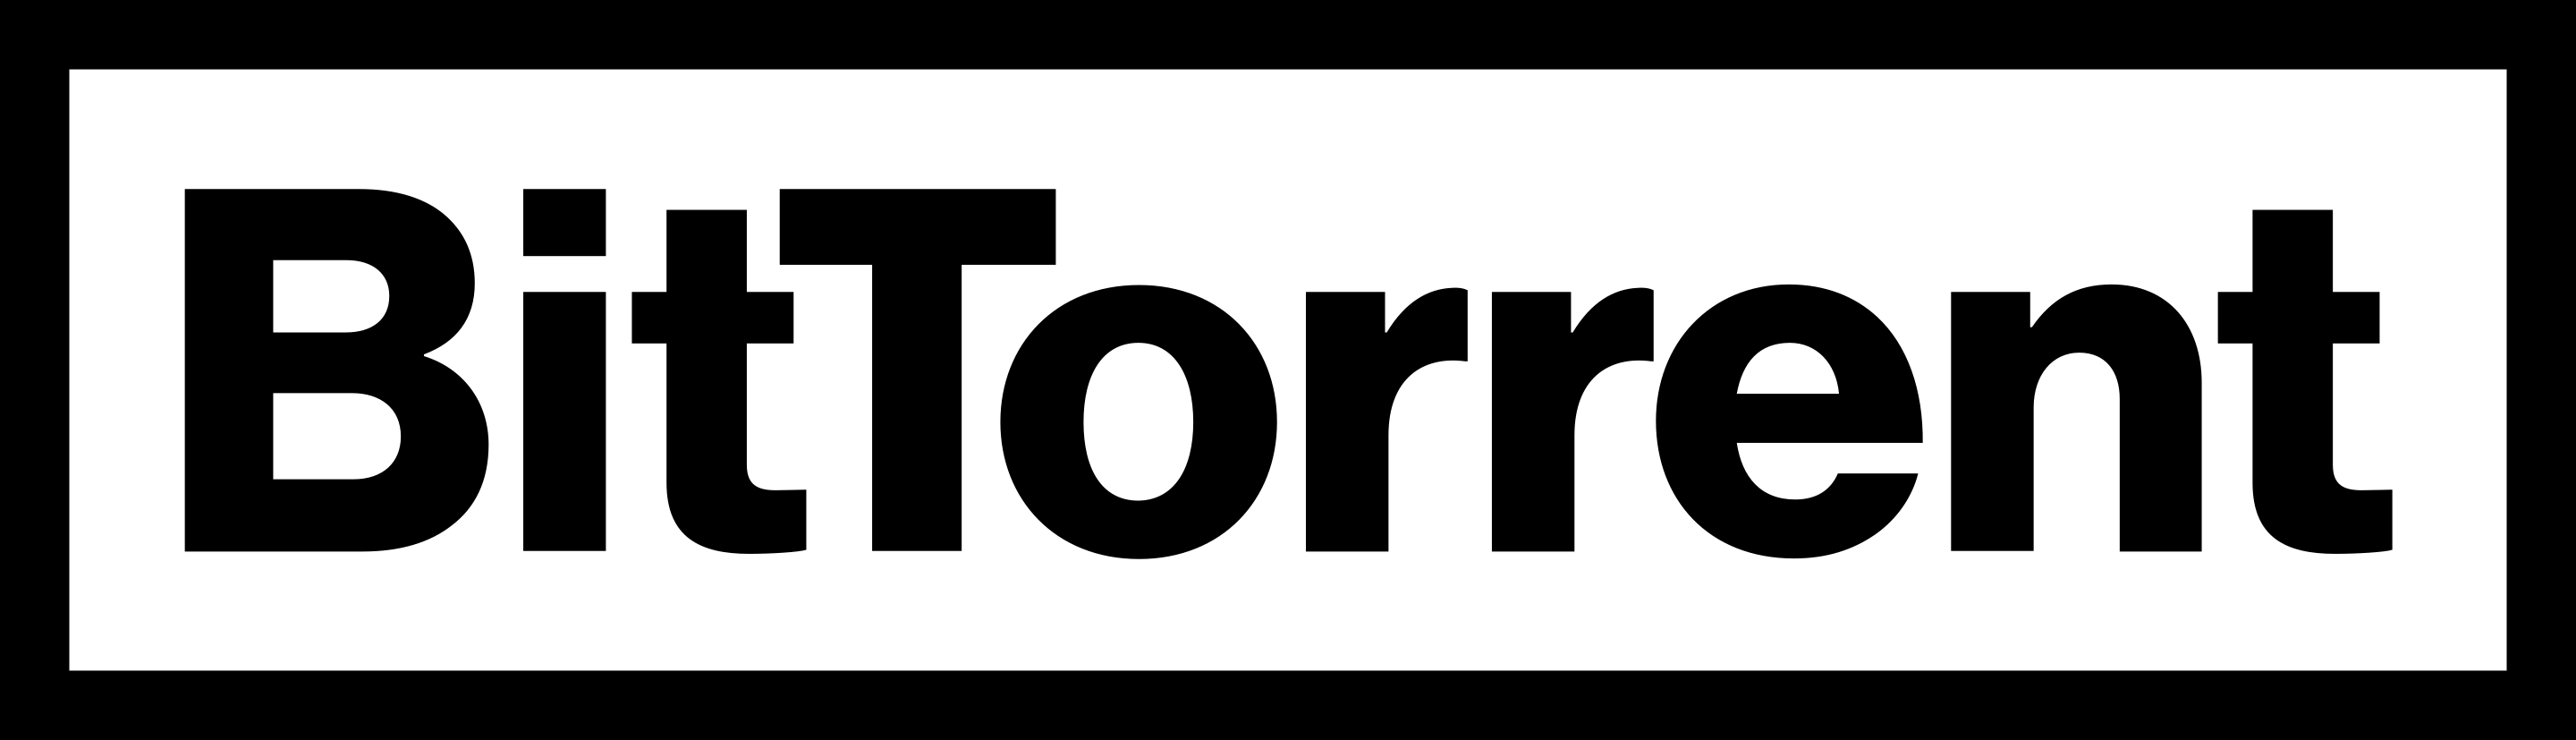 BitTorrent Crypto Logo